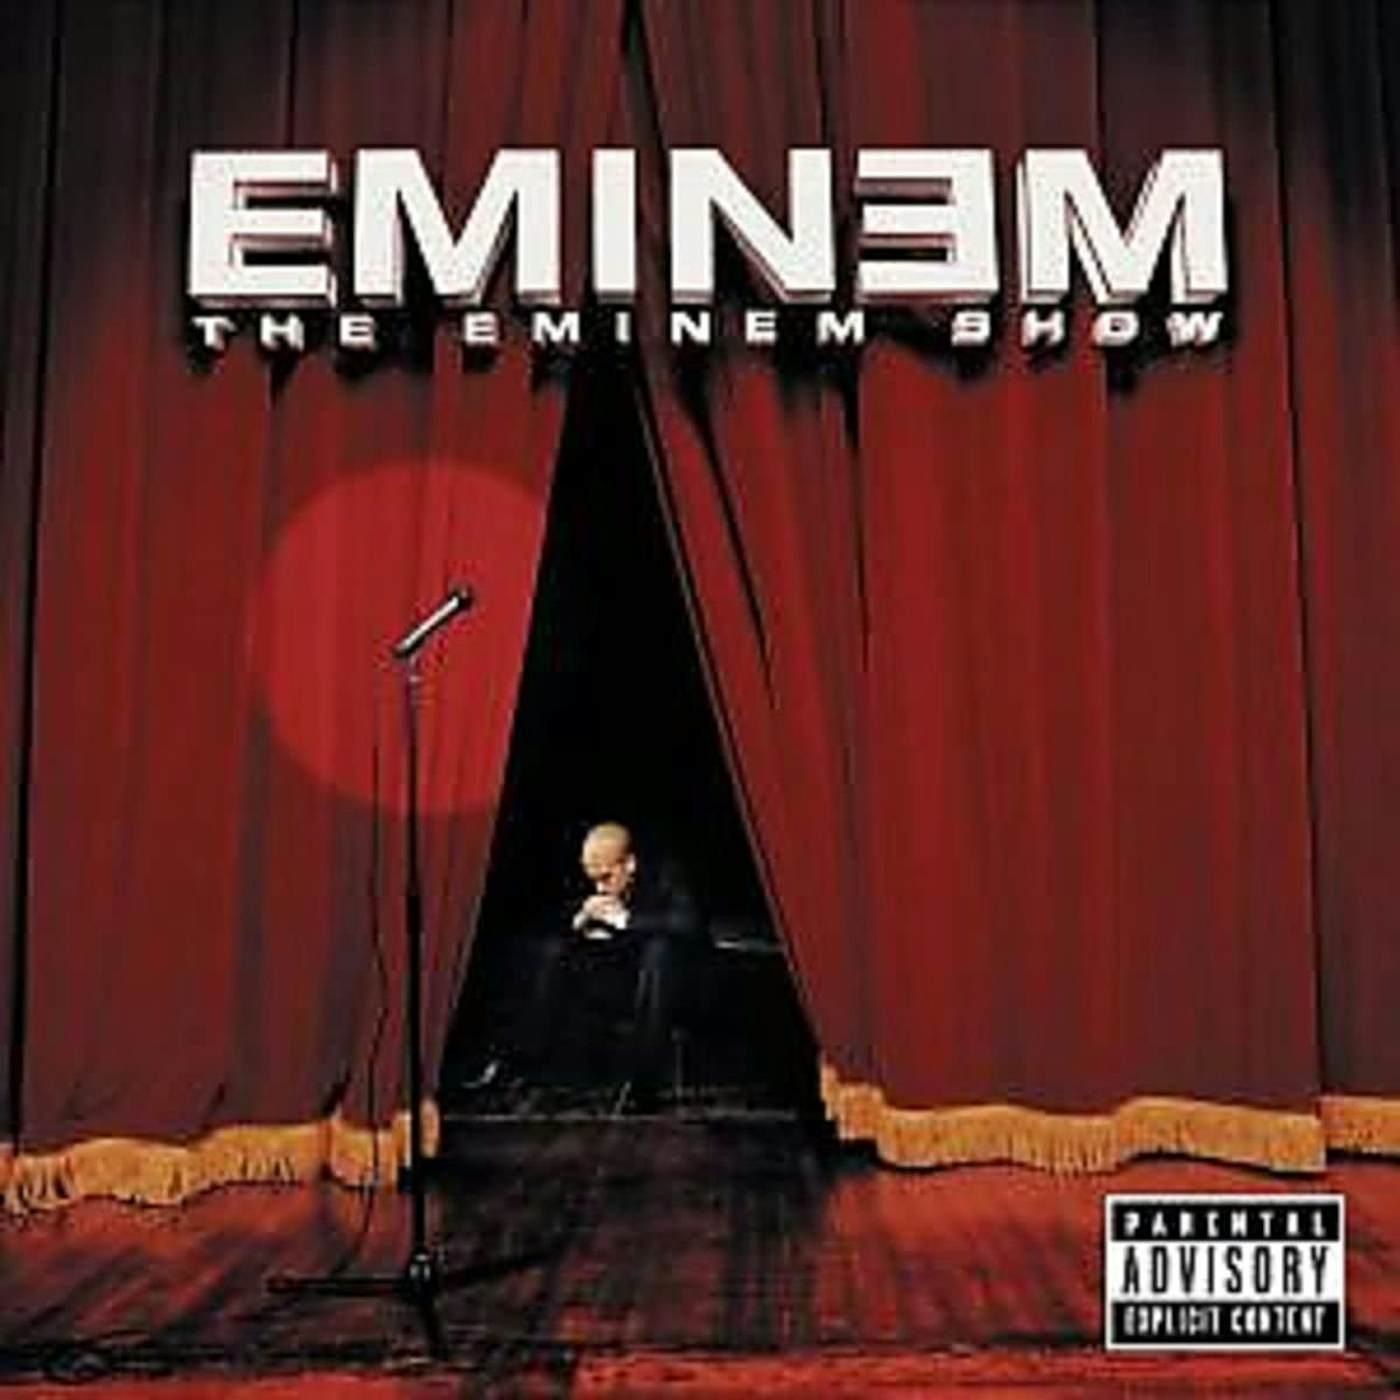 Eminem LP Vinyl Record - The Eminem Show